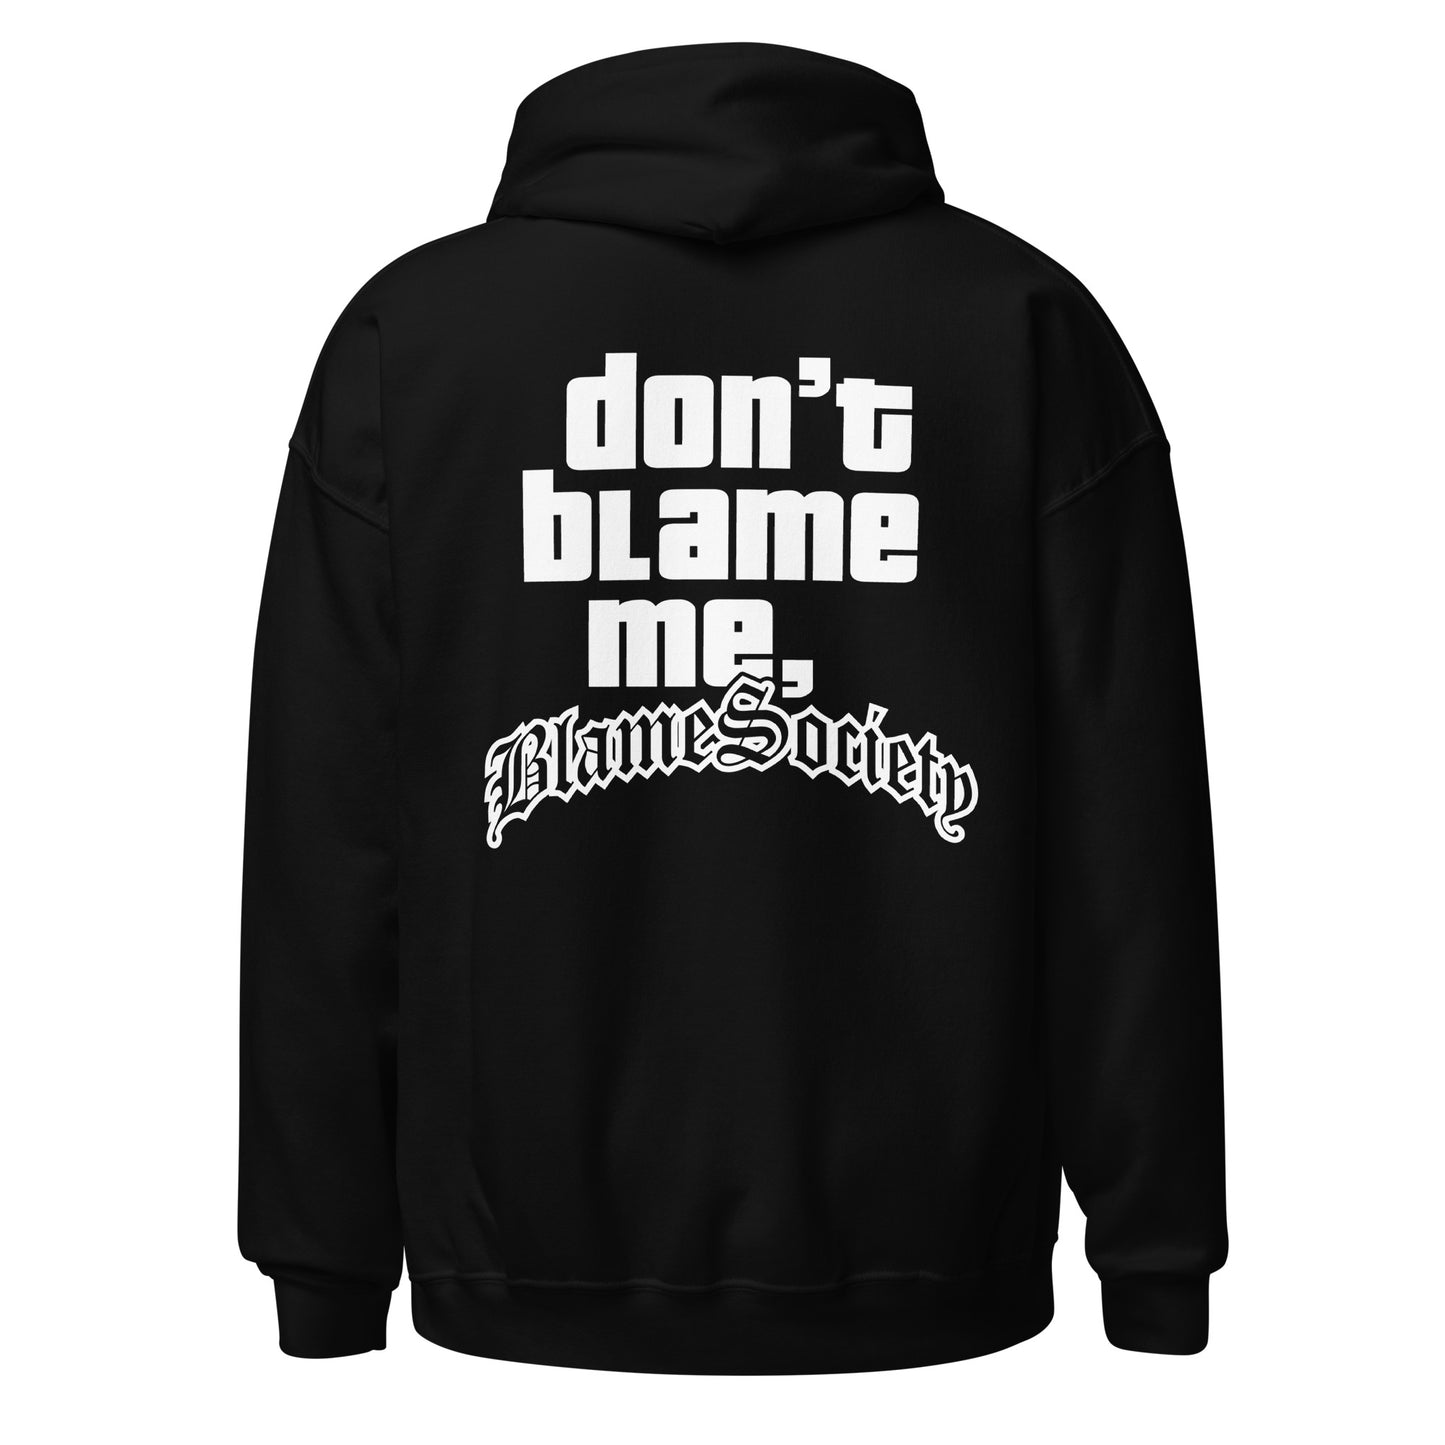 Blame Society pullover hoodie